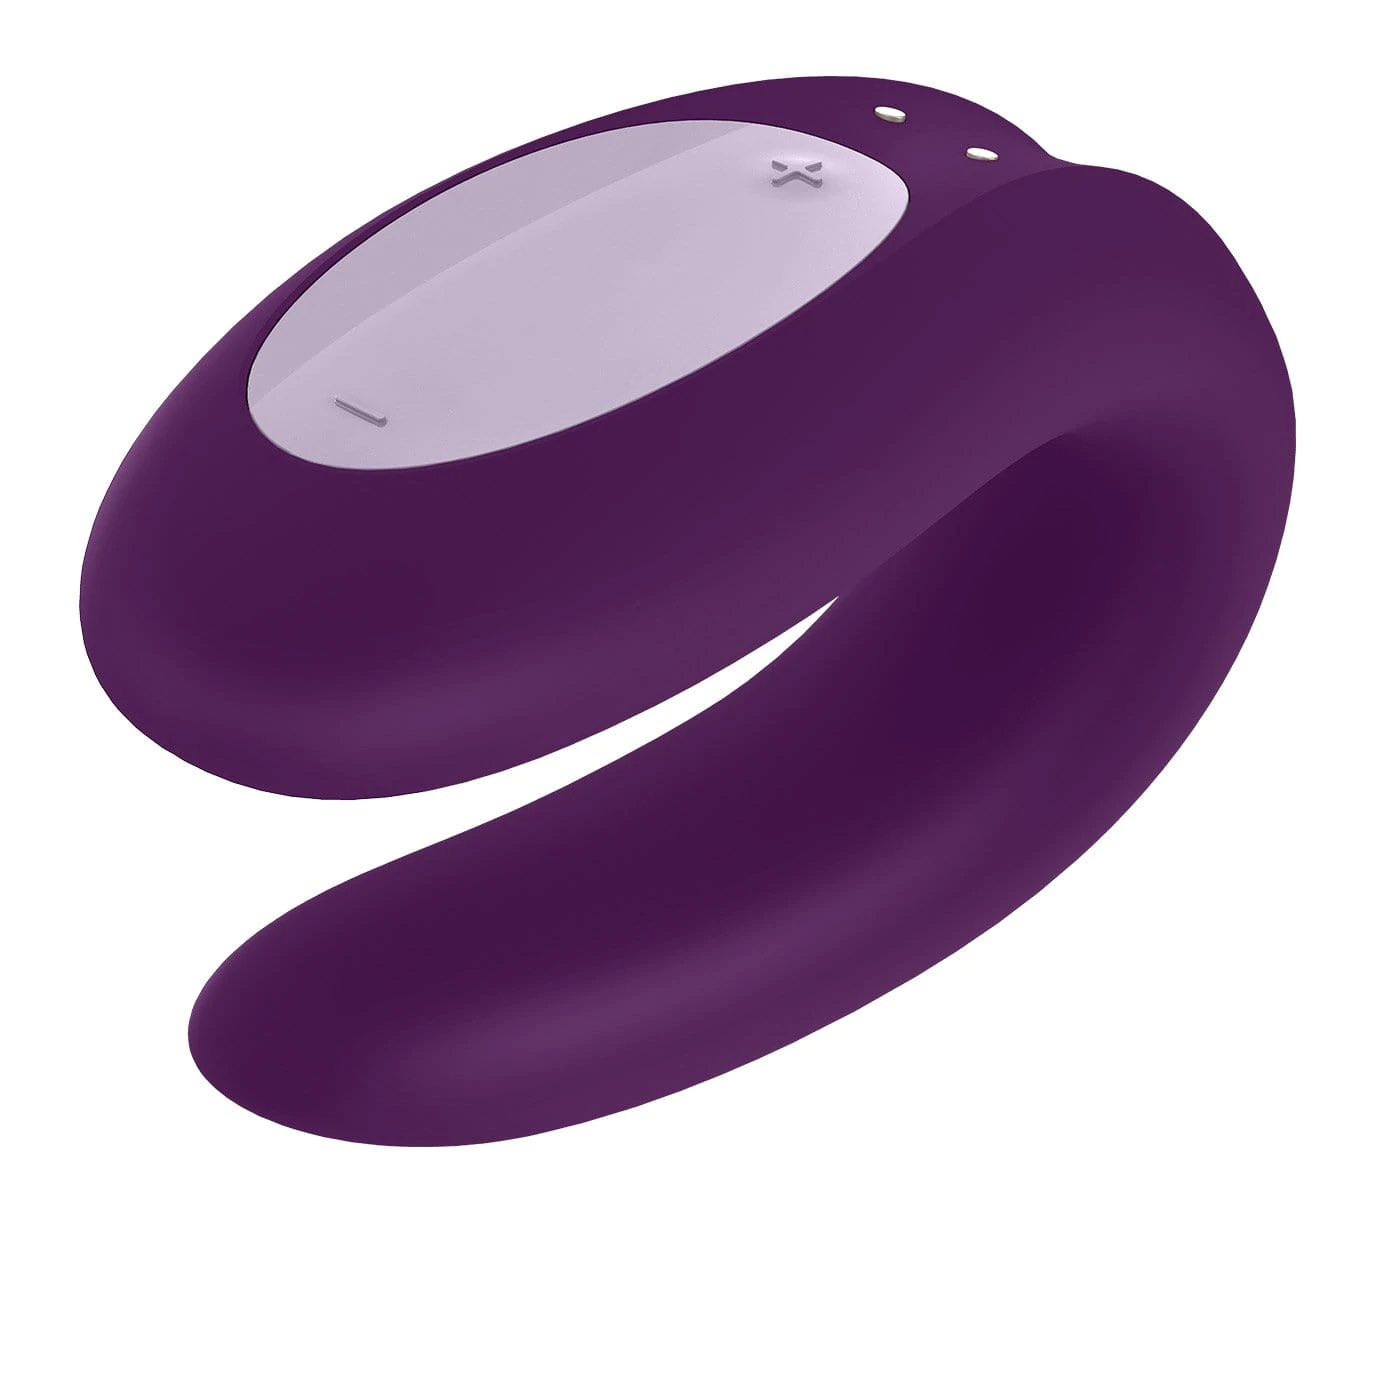 trung rung tinh yeu Satisfyer Double Joy App Controlled Partner Vibrator 5 - Sextoy USA trứng rung tình yêu Satisfyer - Double Joy App-Controlled Partner Vibrator hiện đại